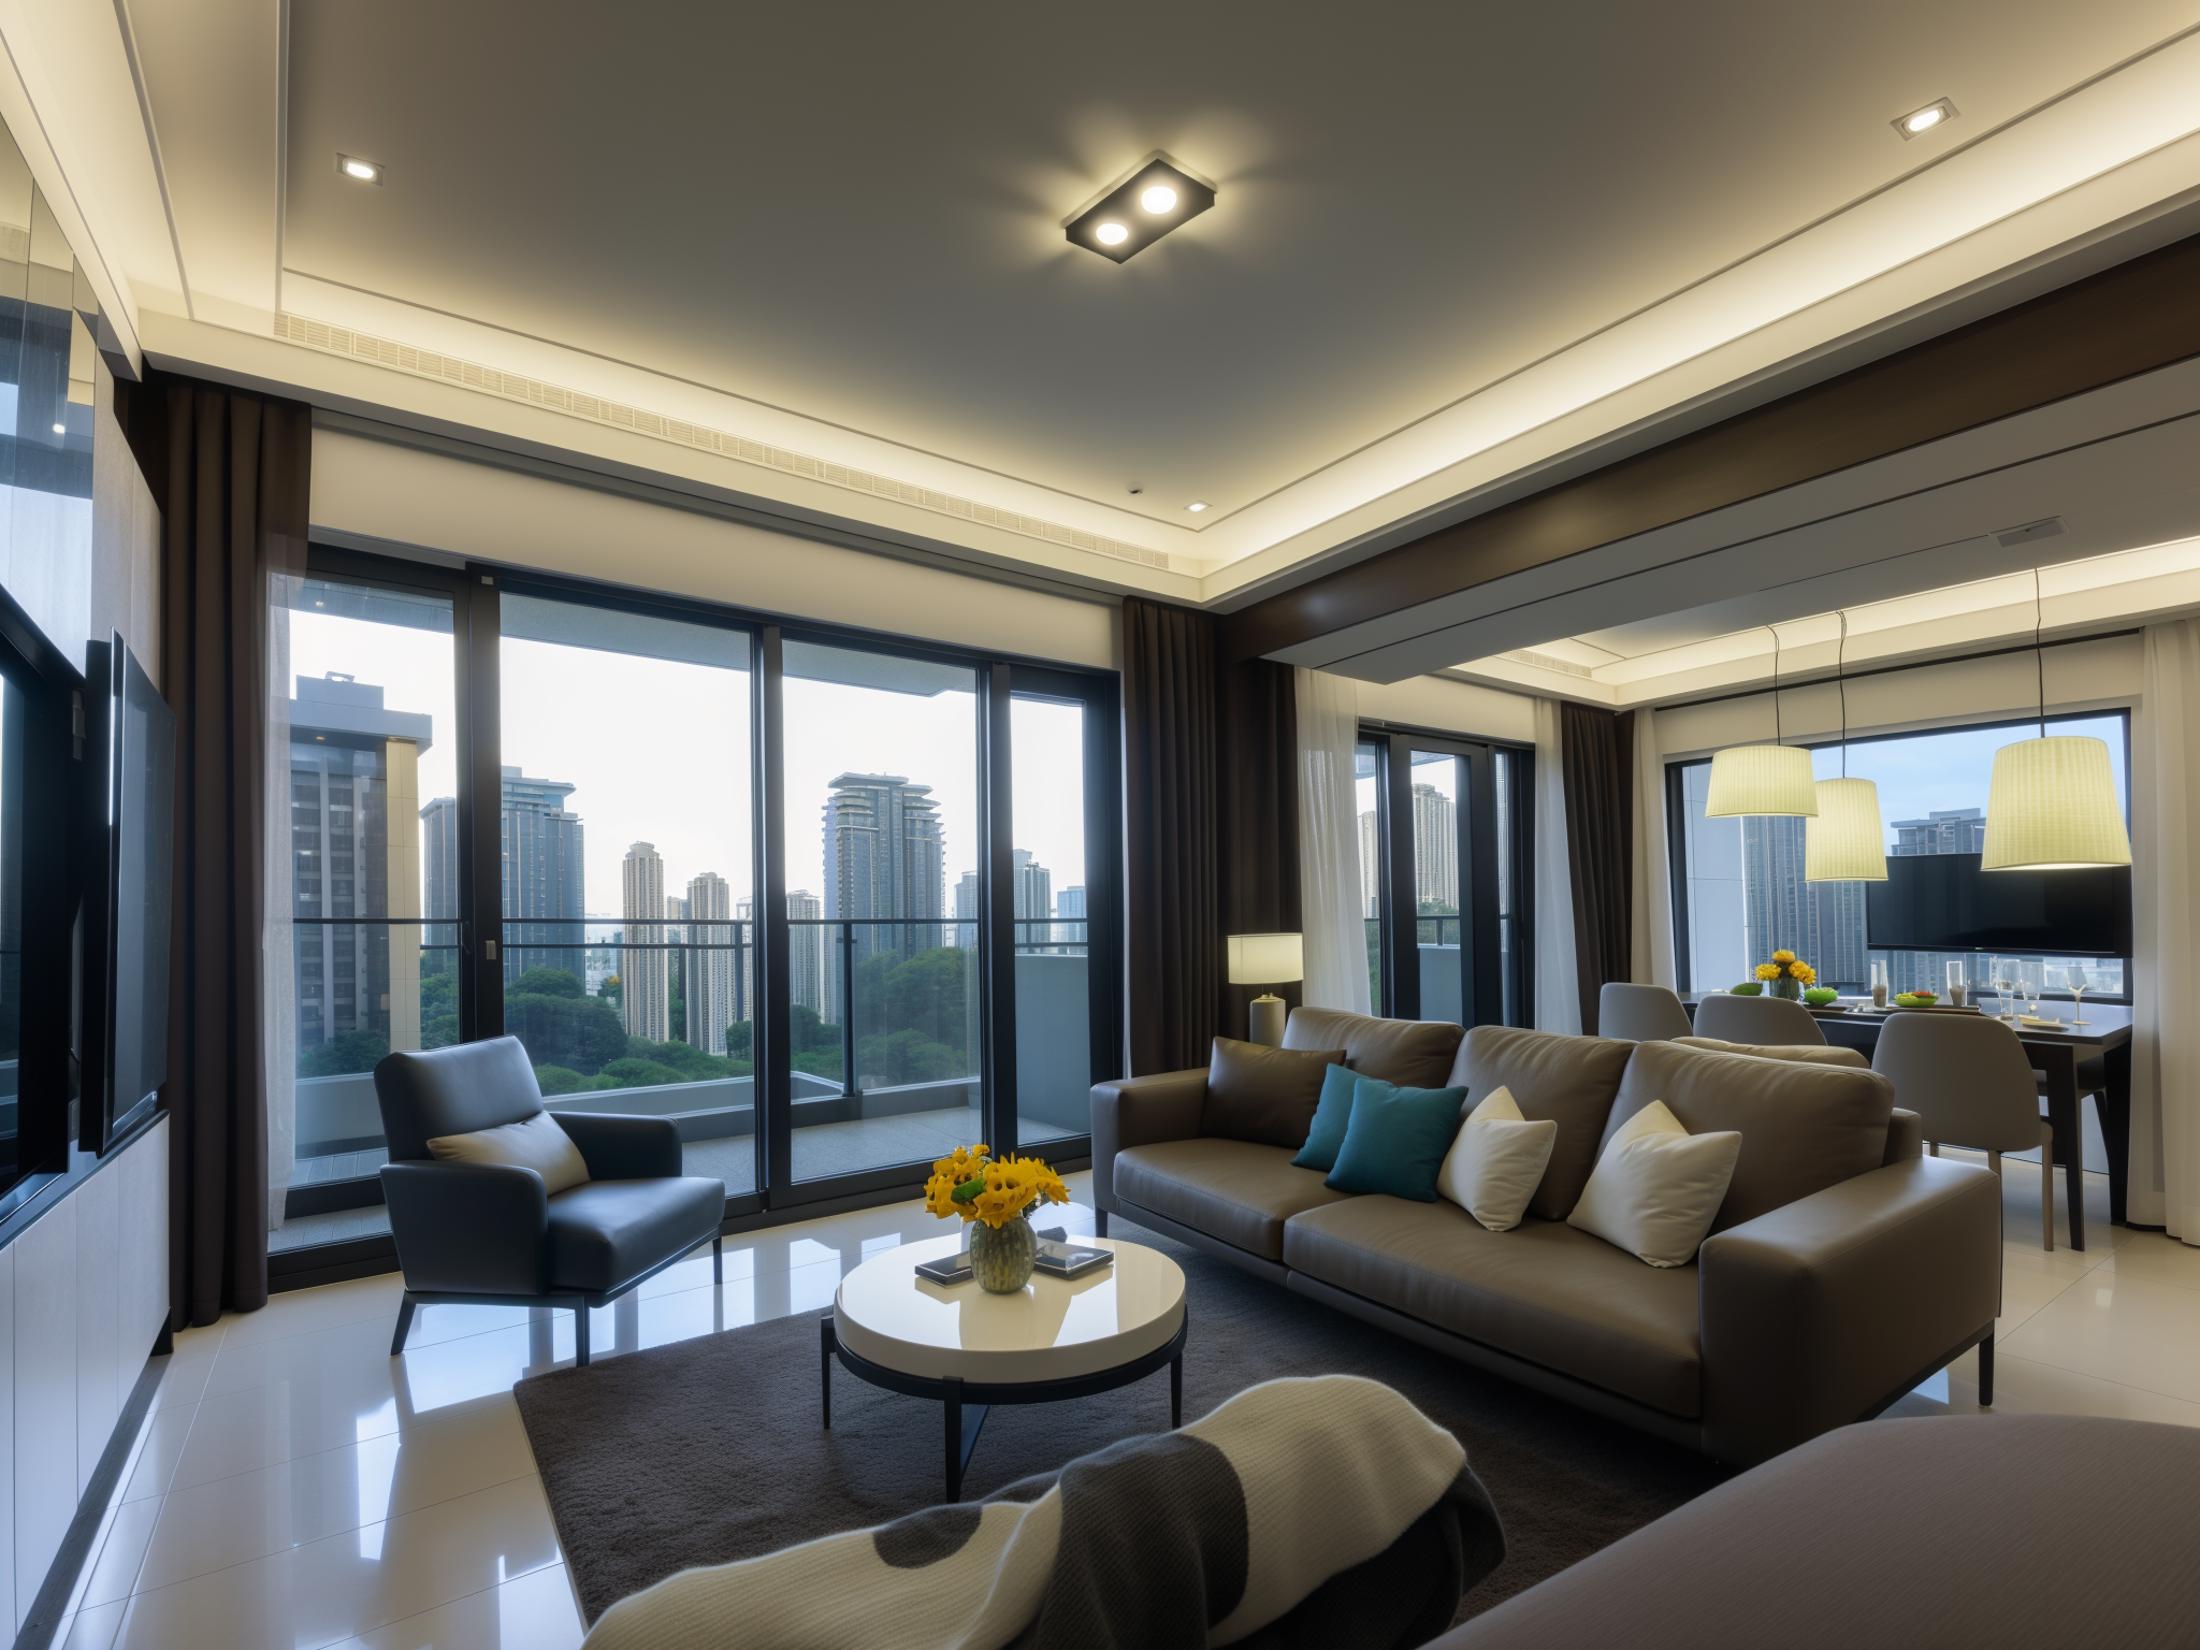 JJ's Interior Space - Living Room image by jjhuang